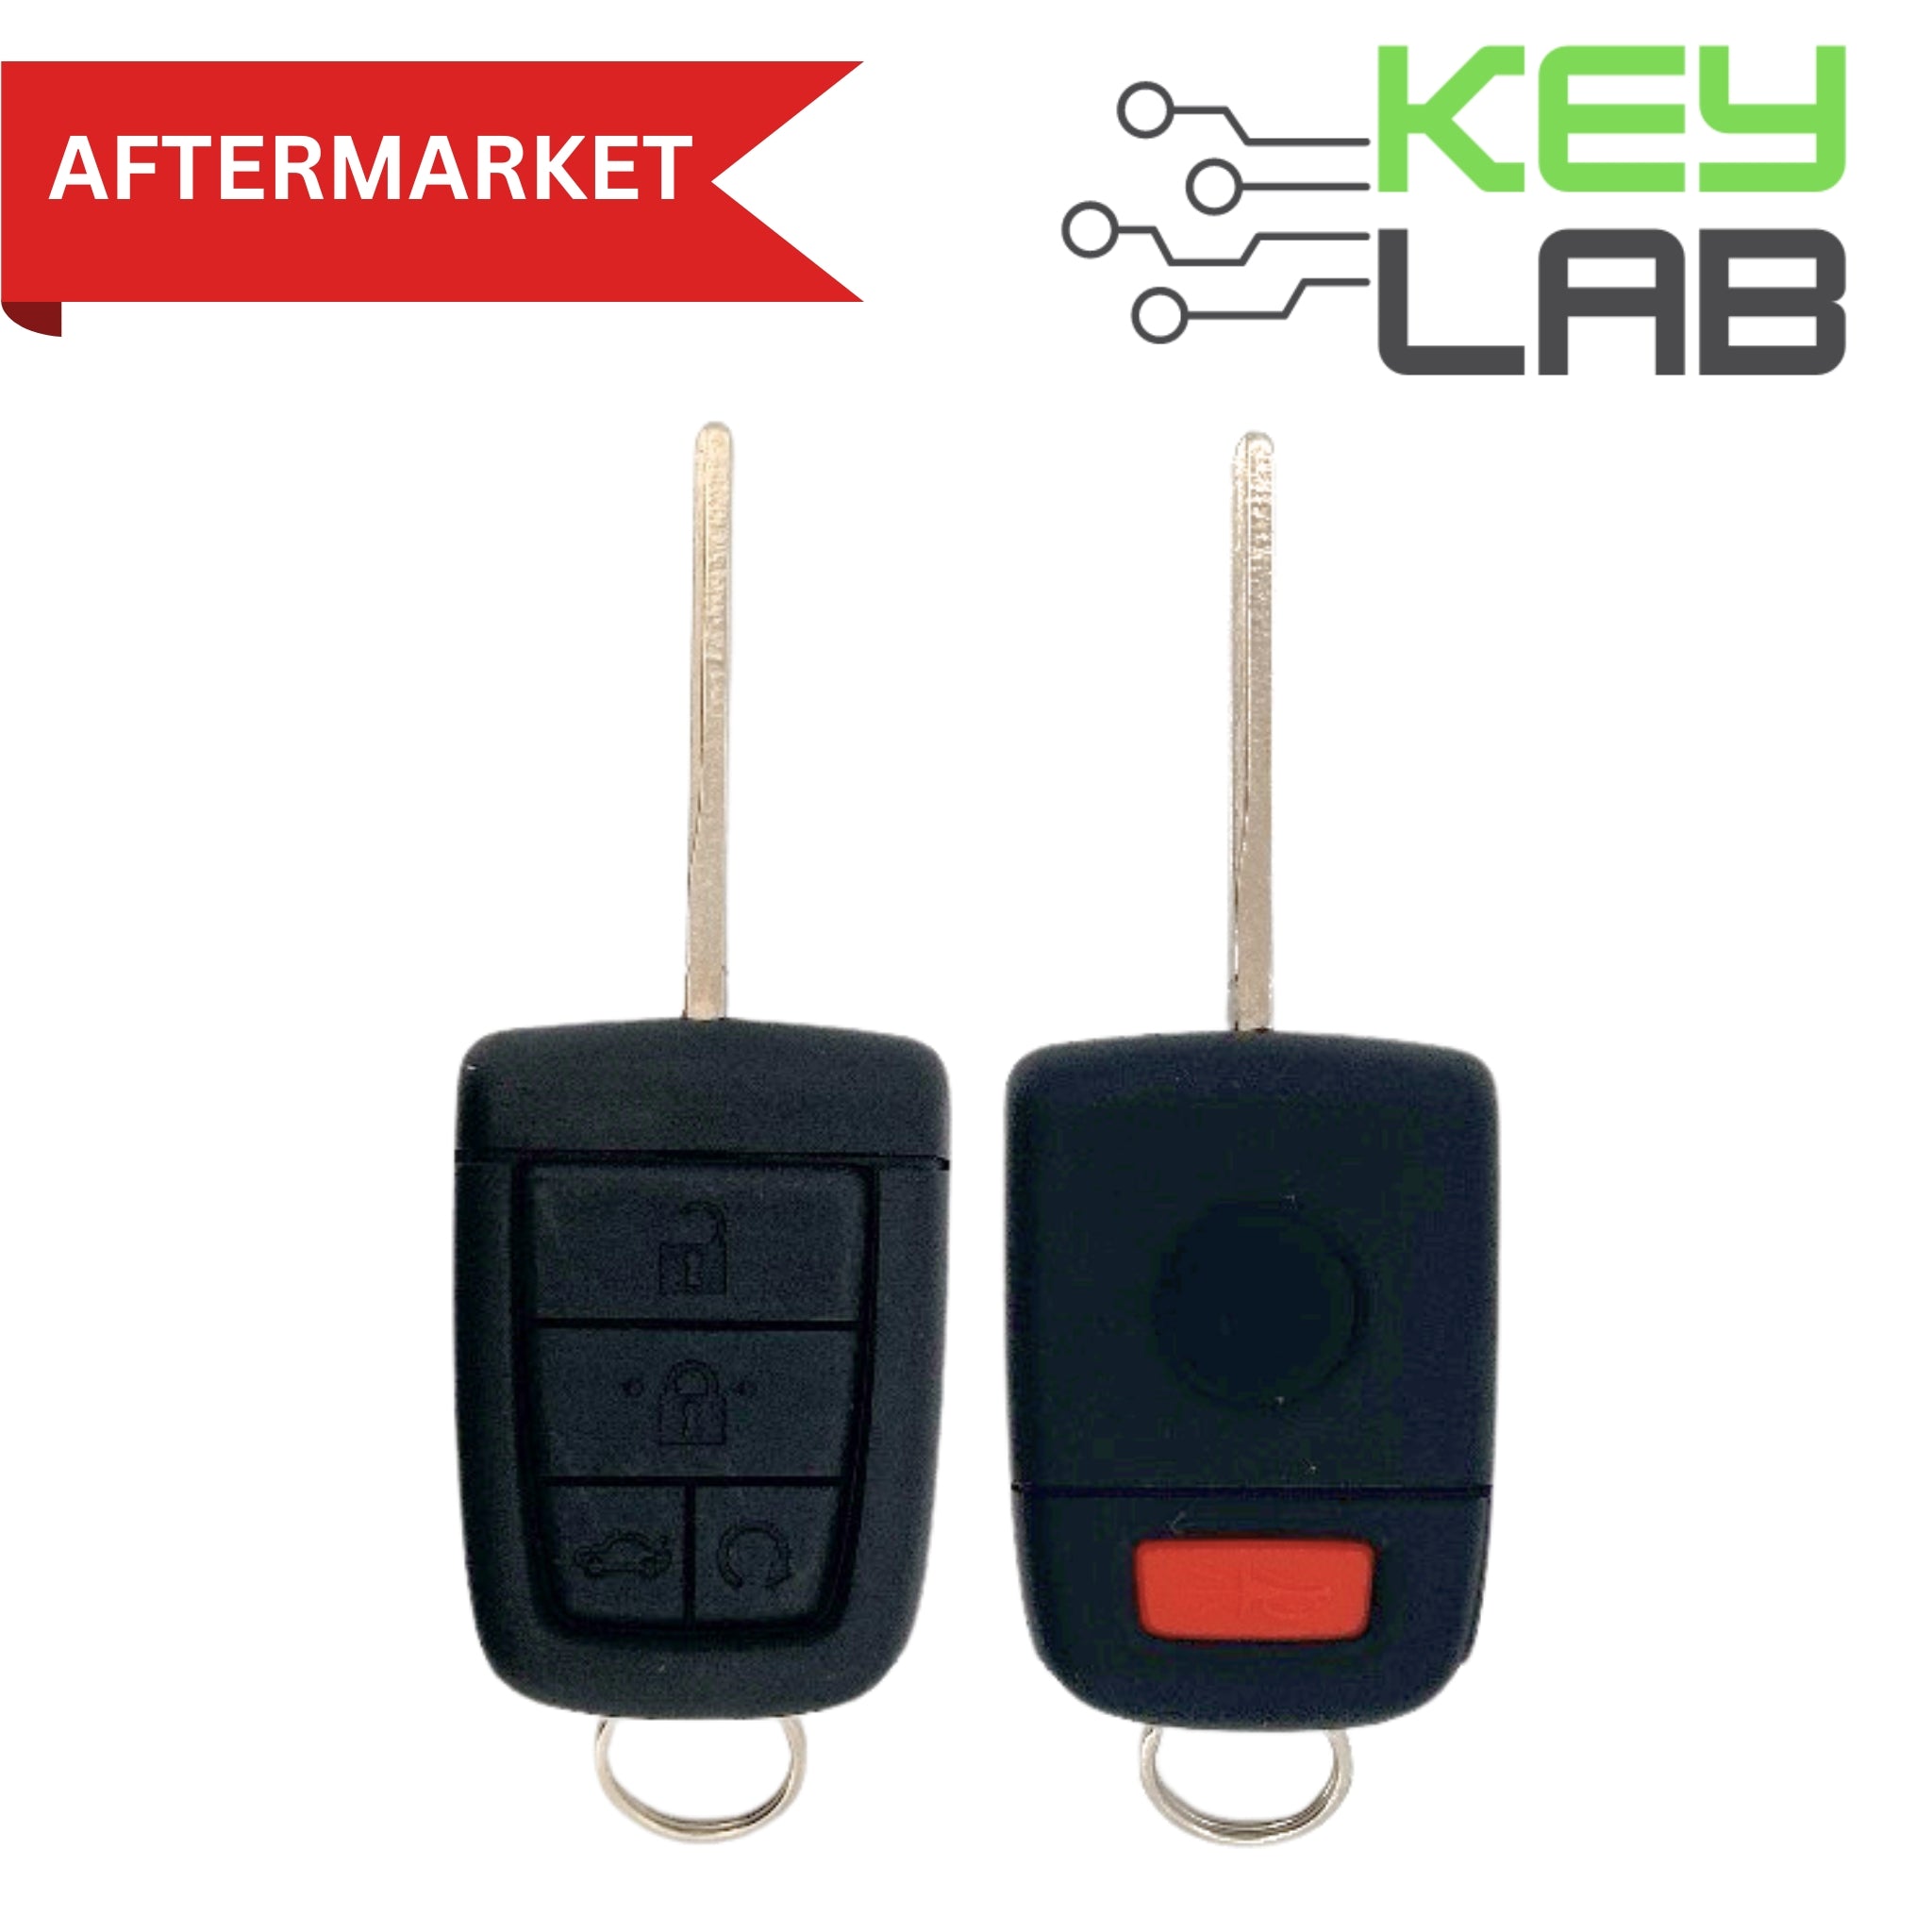 GM Aftermarket 2008-2013 G8, Caprice Remote Head Key 5B Remote Start FCCID: OUC6000083 PN# 92237316, 92201609 - Royal Key Supply